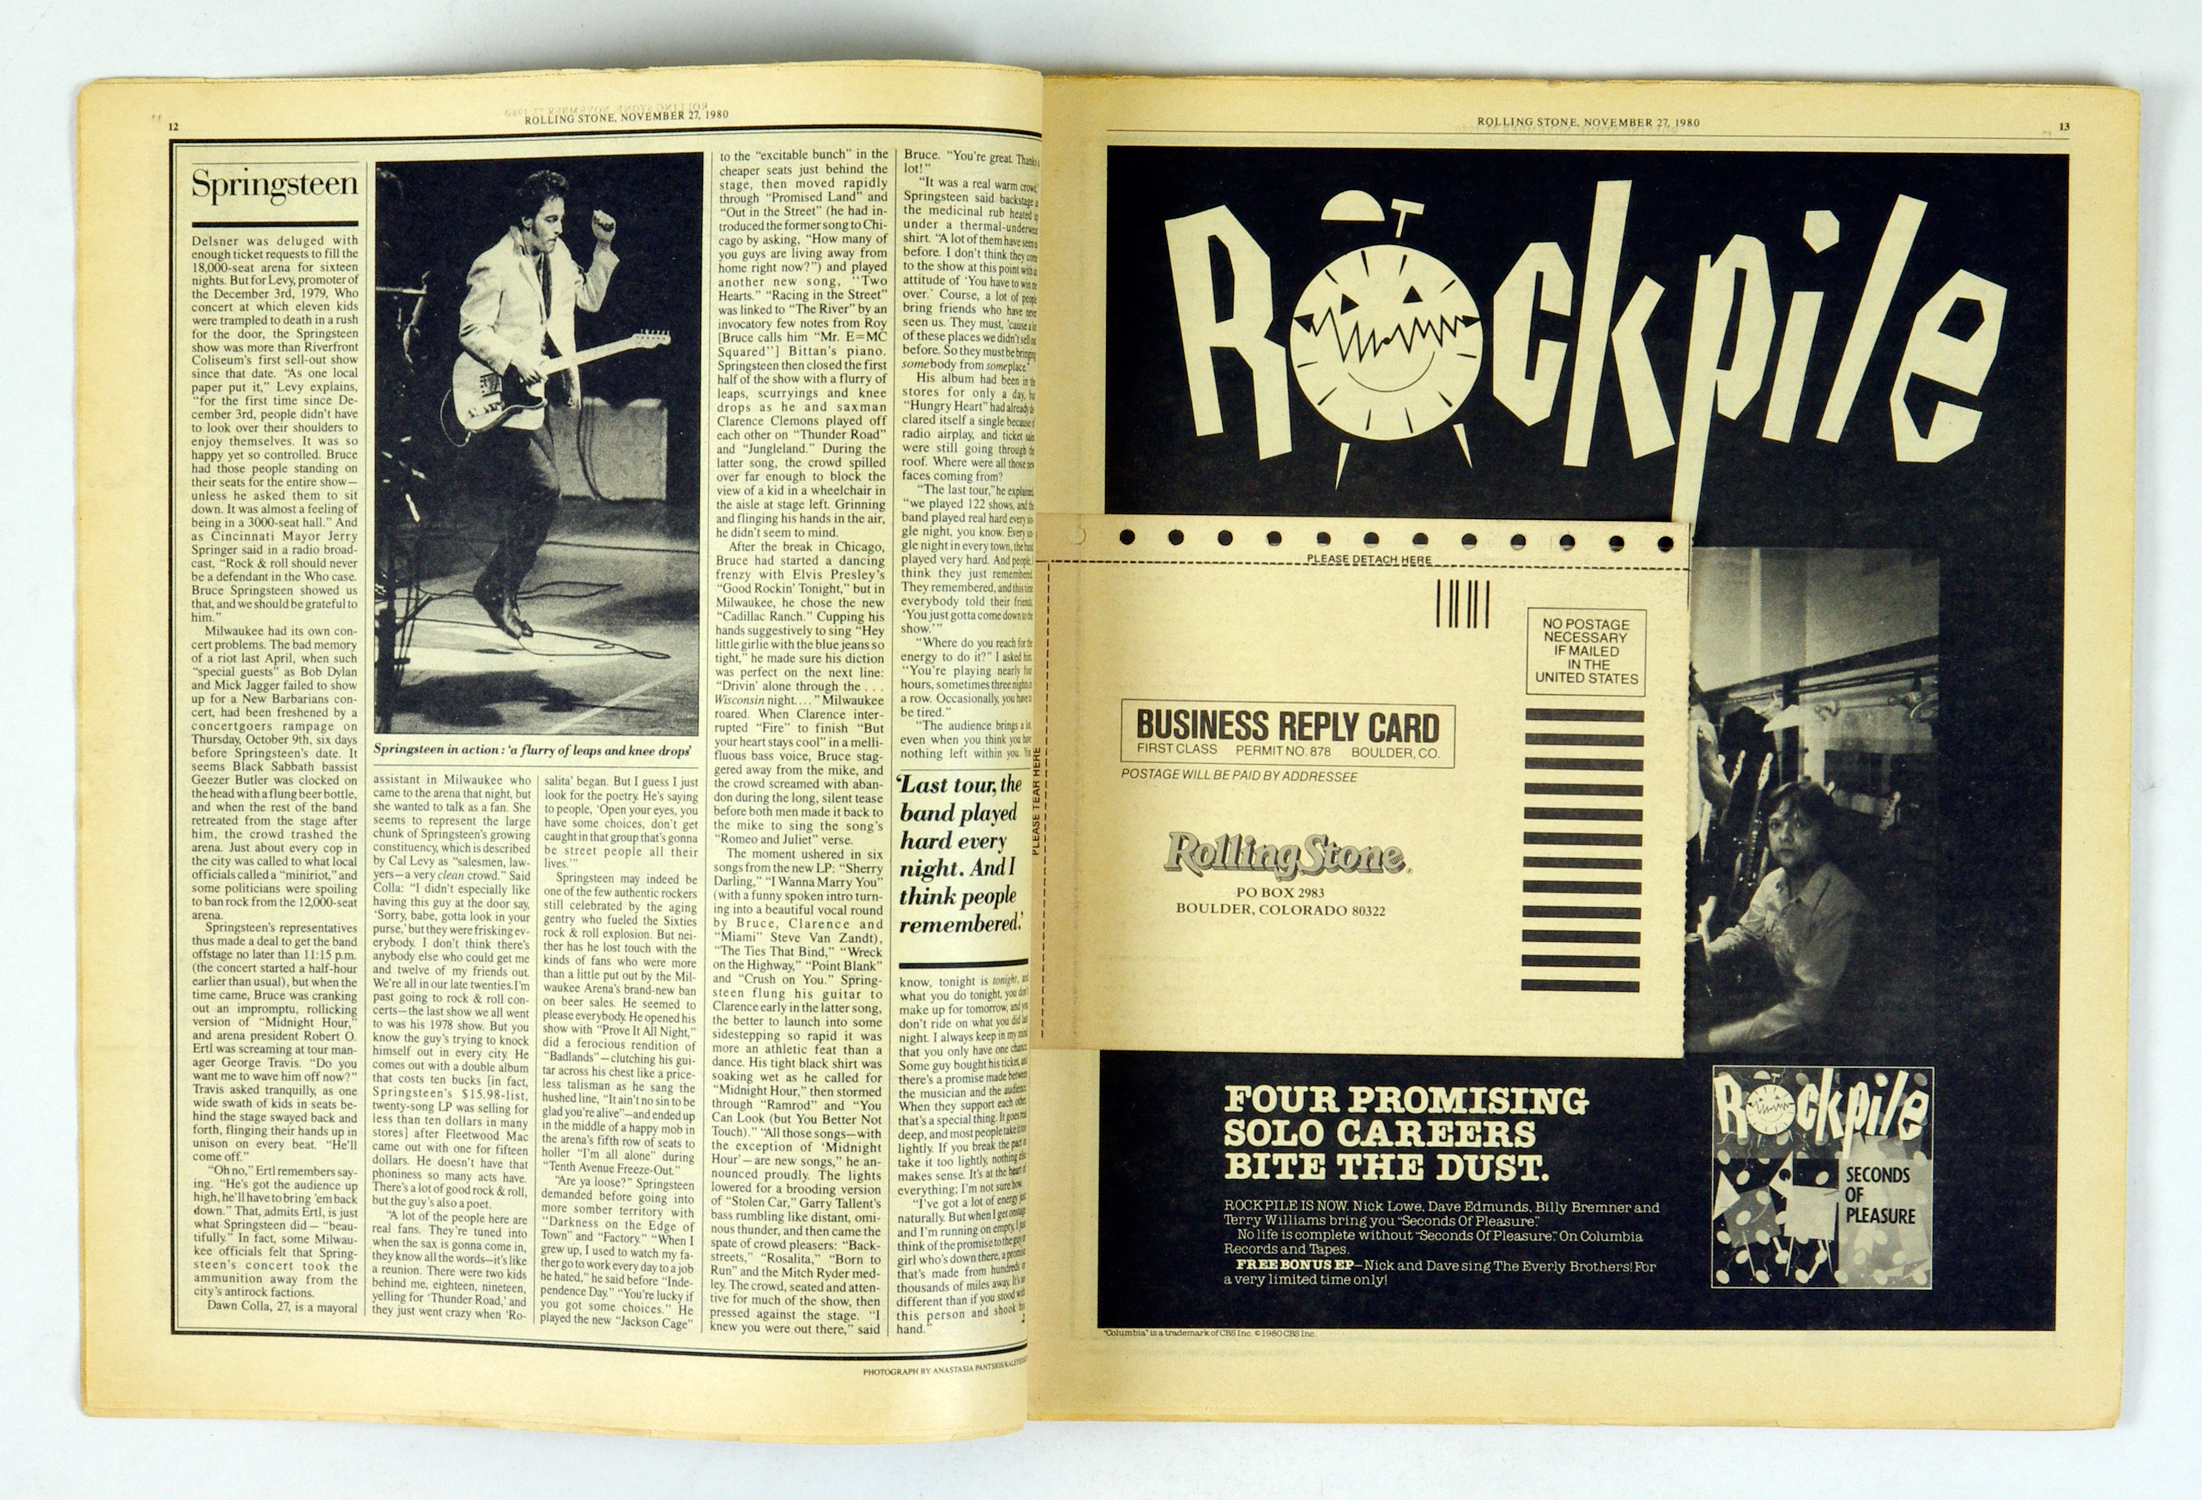 Rolling Stone Magazine Back Issue 1980 Nov 27 No. 331 Jill Clayburgh Michael Douglas